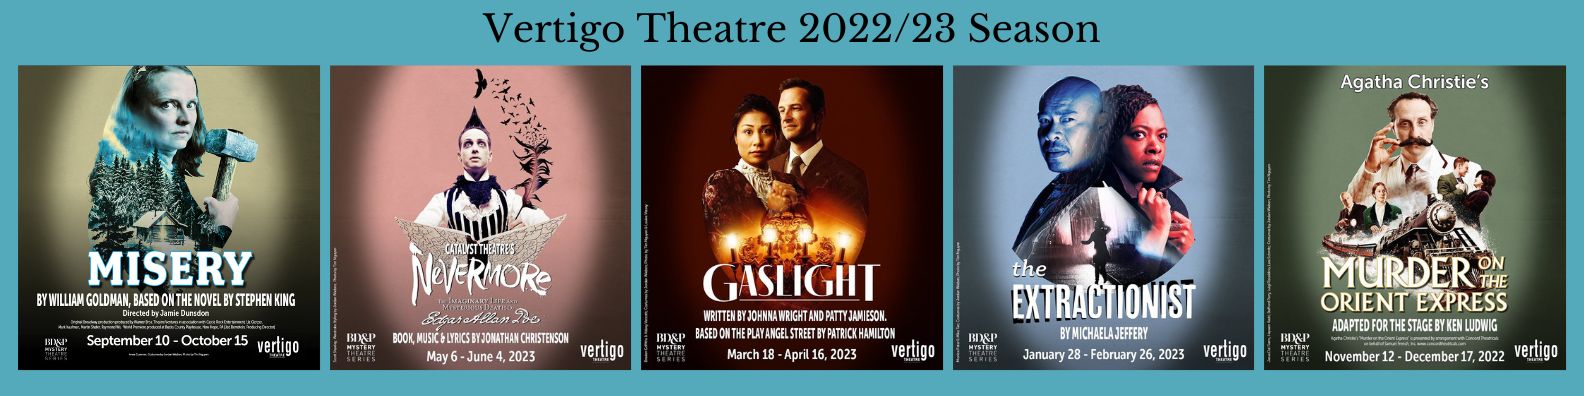 Vertigo Theatre 2022/23 Season - Misery, Nevermore, Gaslight, the Extractionist, Murder on the Orient Express